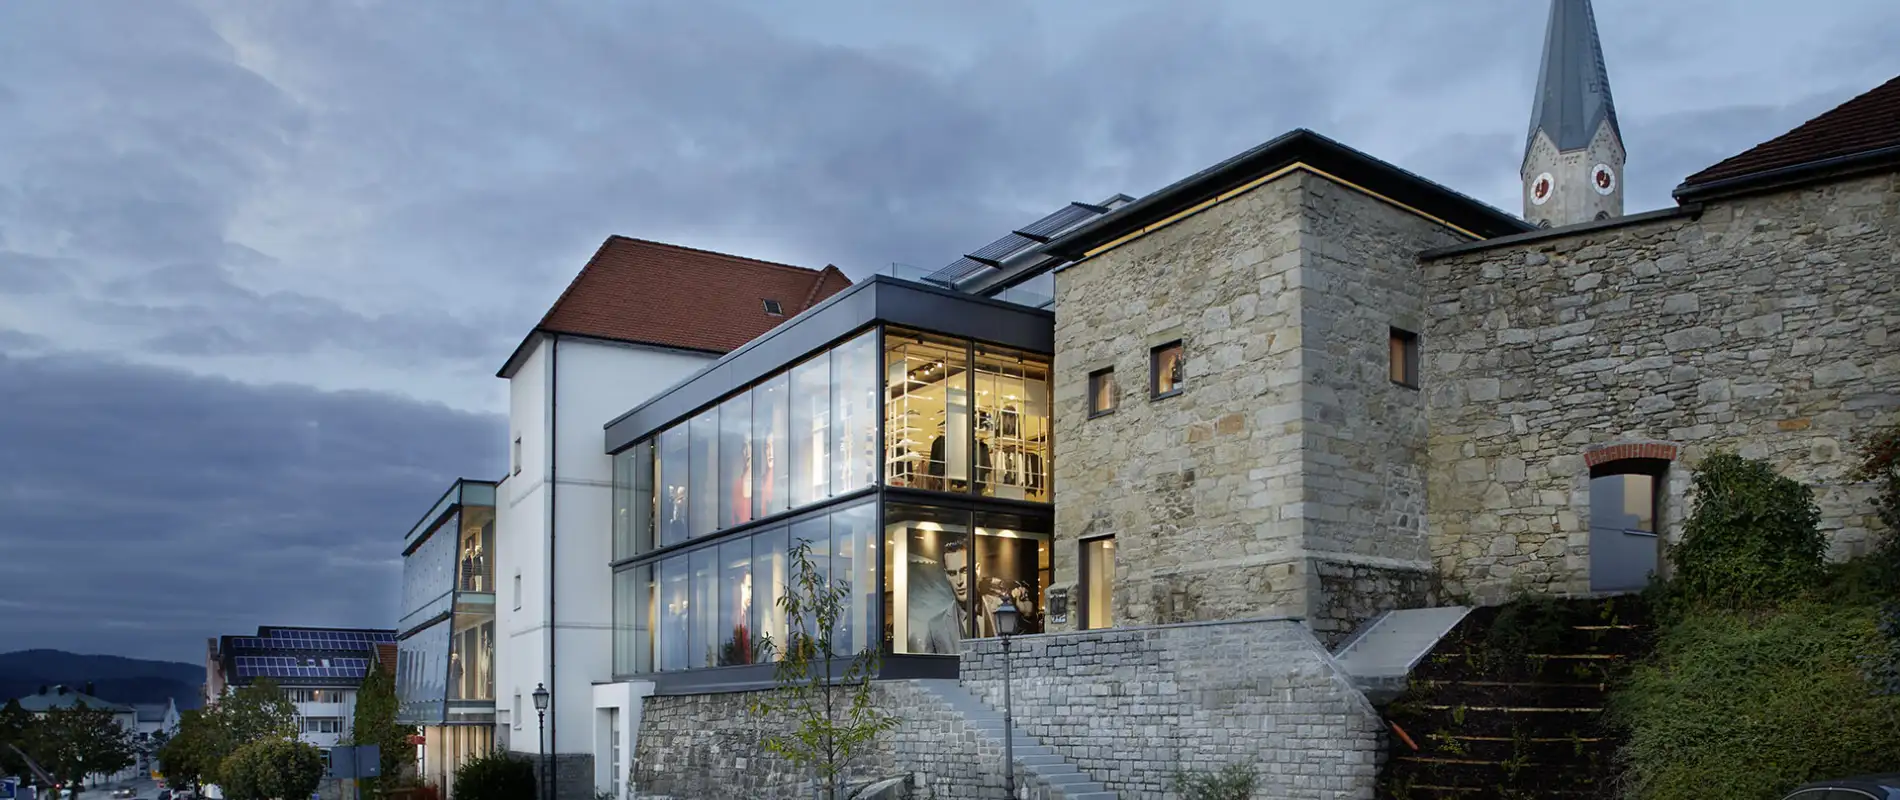 fashion house - new construction and reconstruction - Garhammer Waldkirchen - facade view - outside - evening light